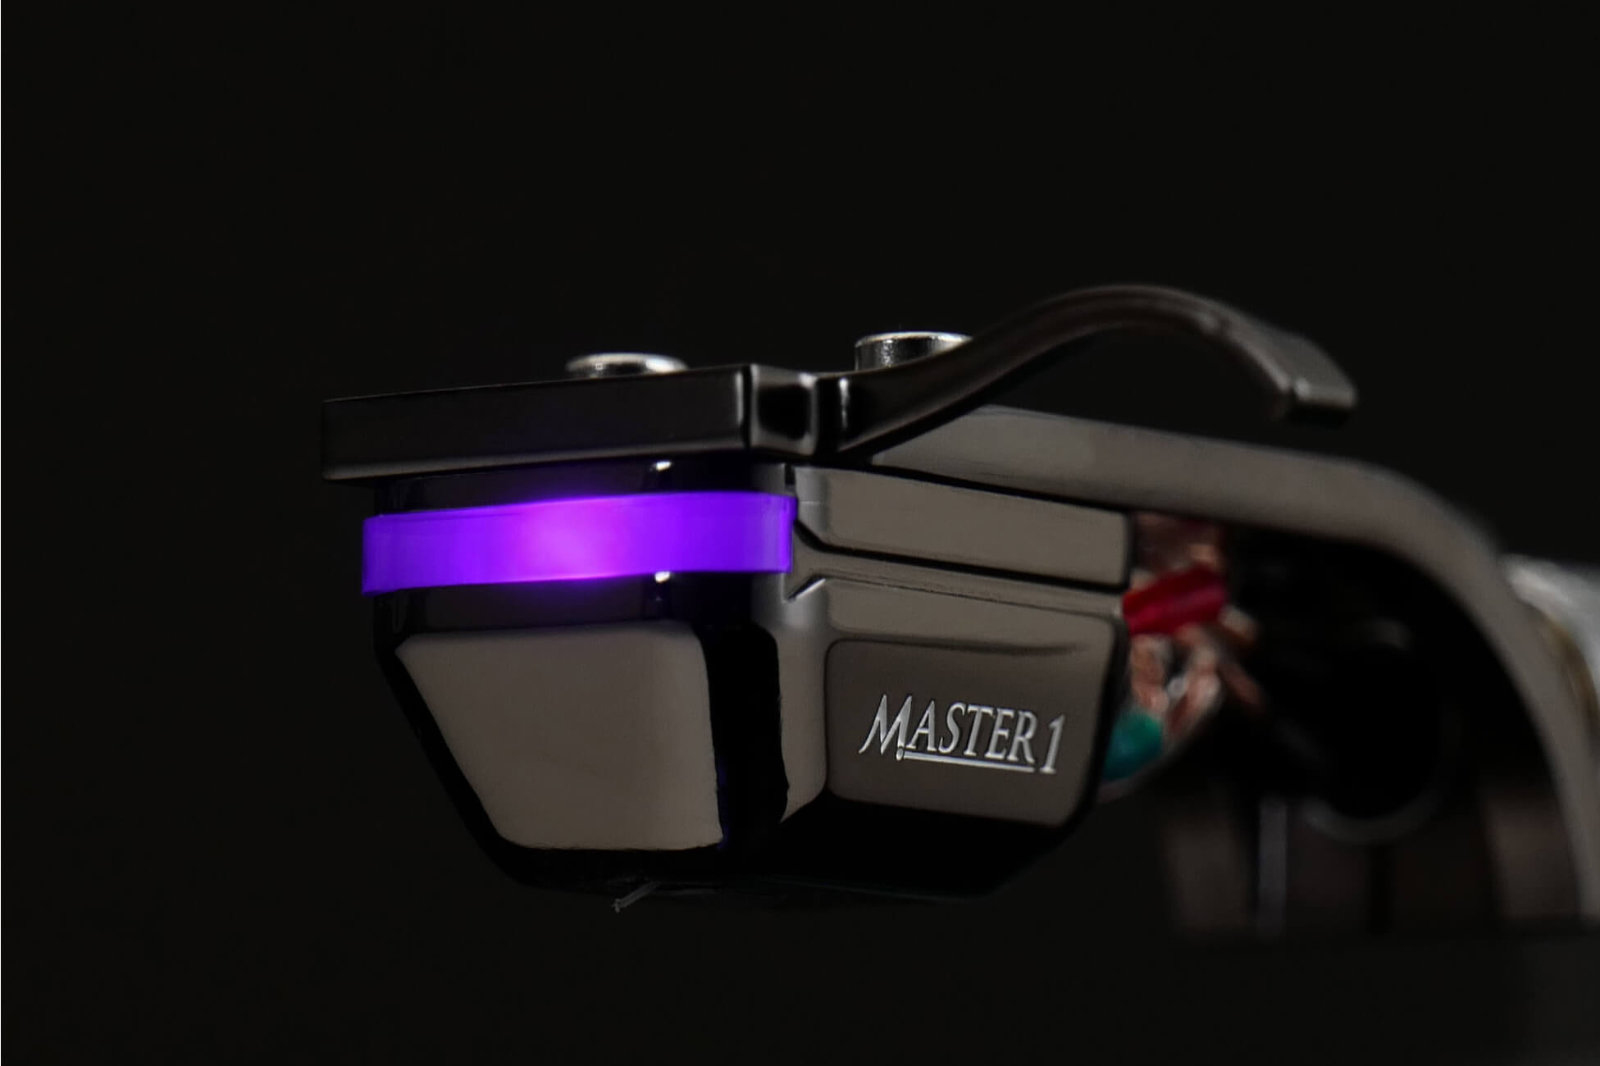 DS Master1 Abtaster